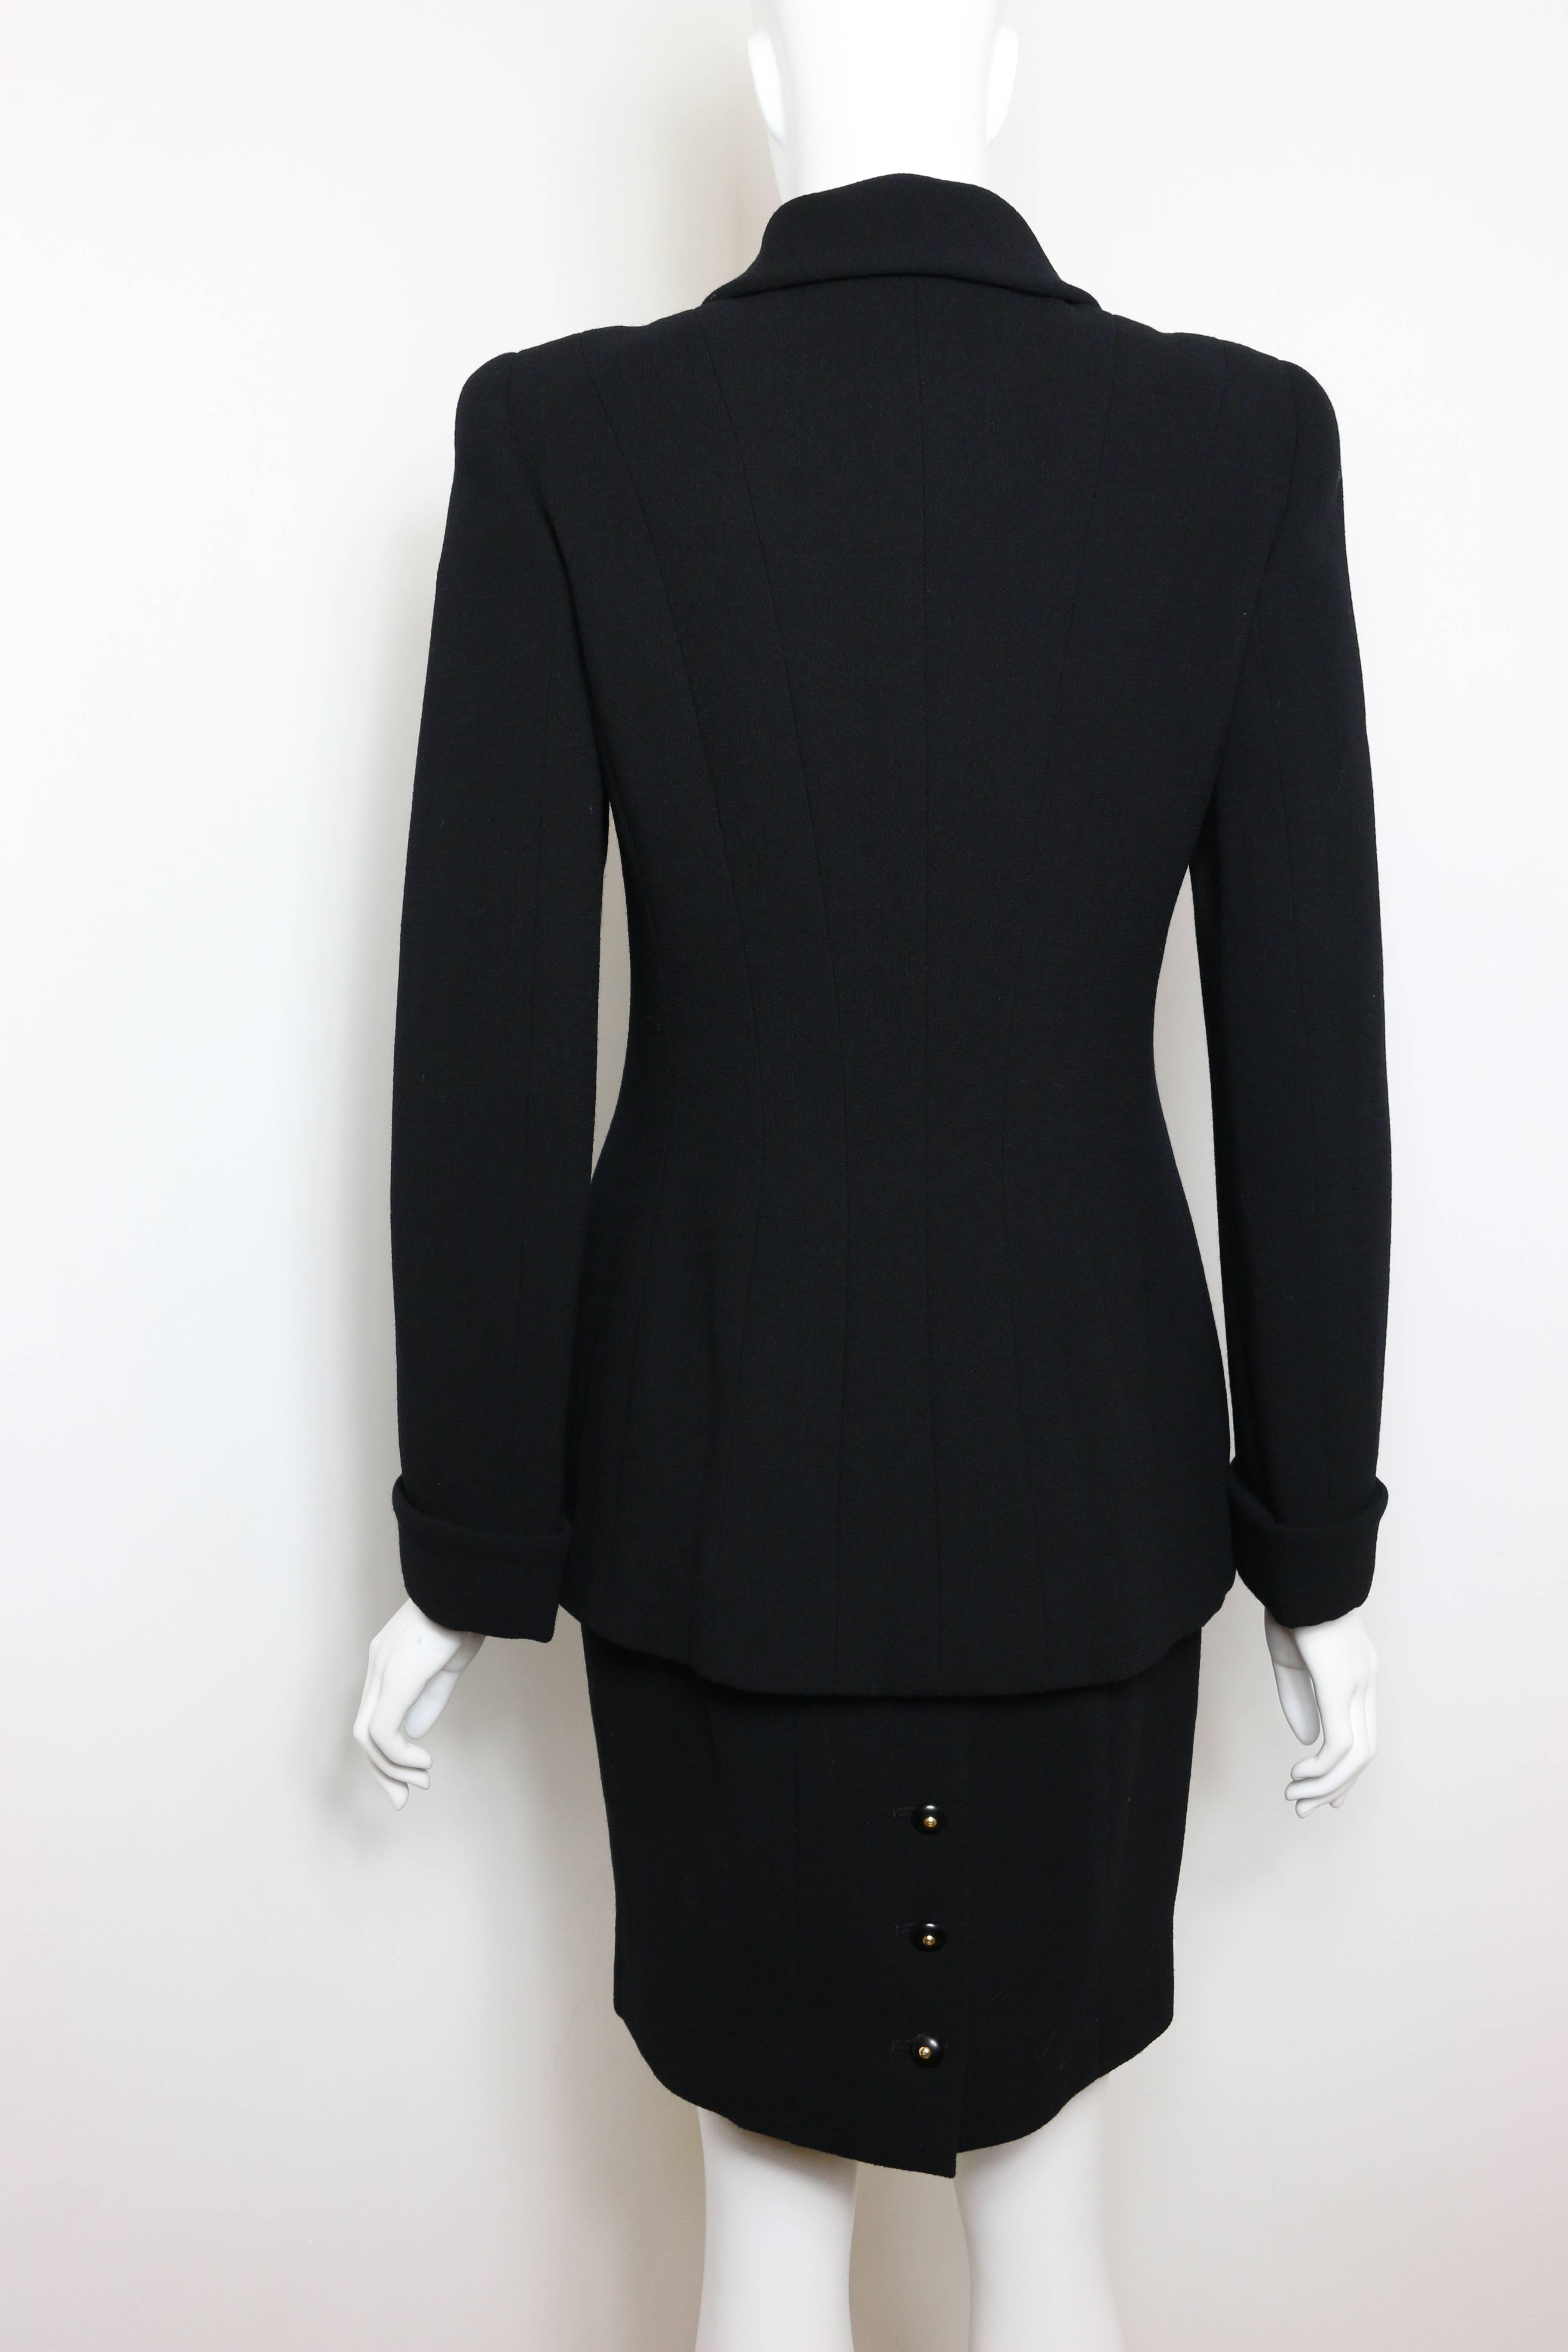 Chanel Black Wool Suit 1